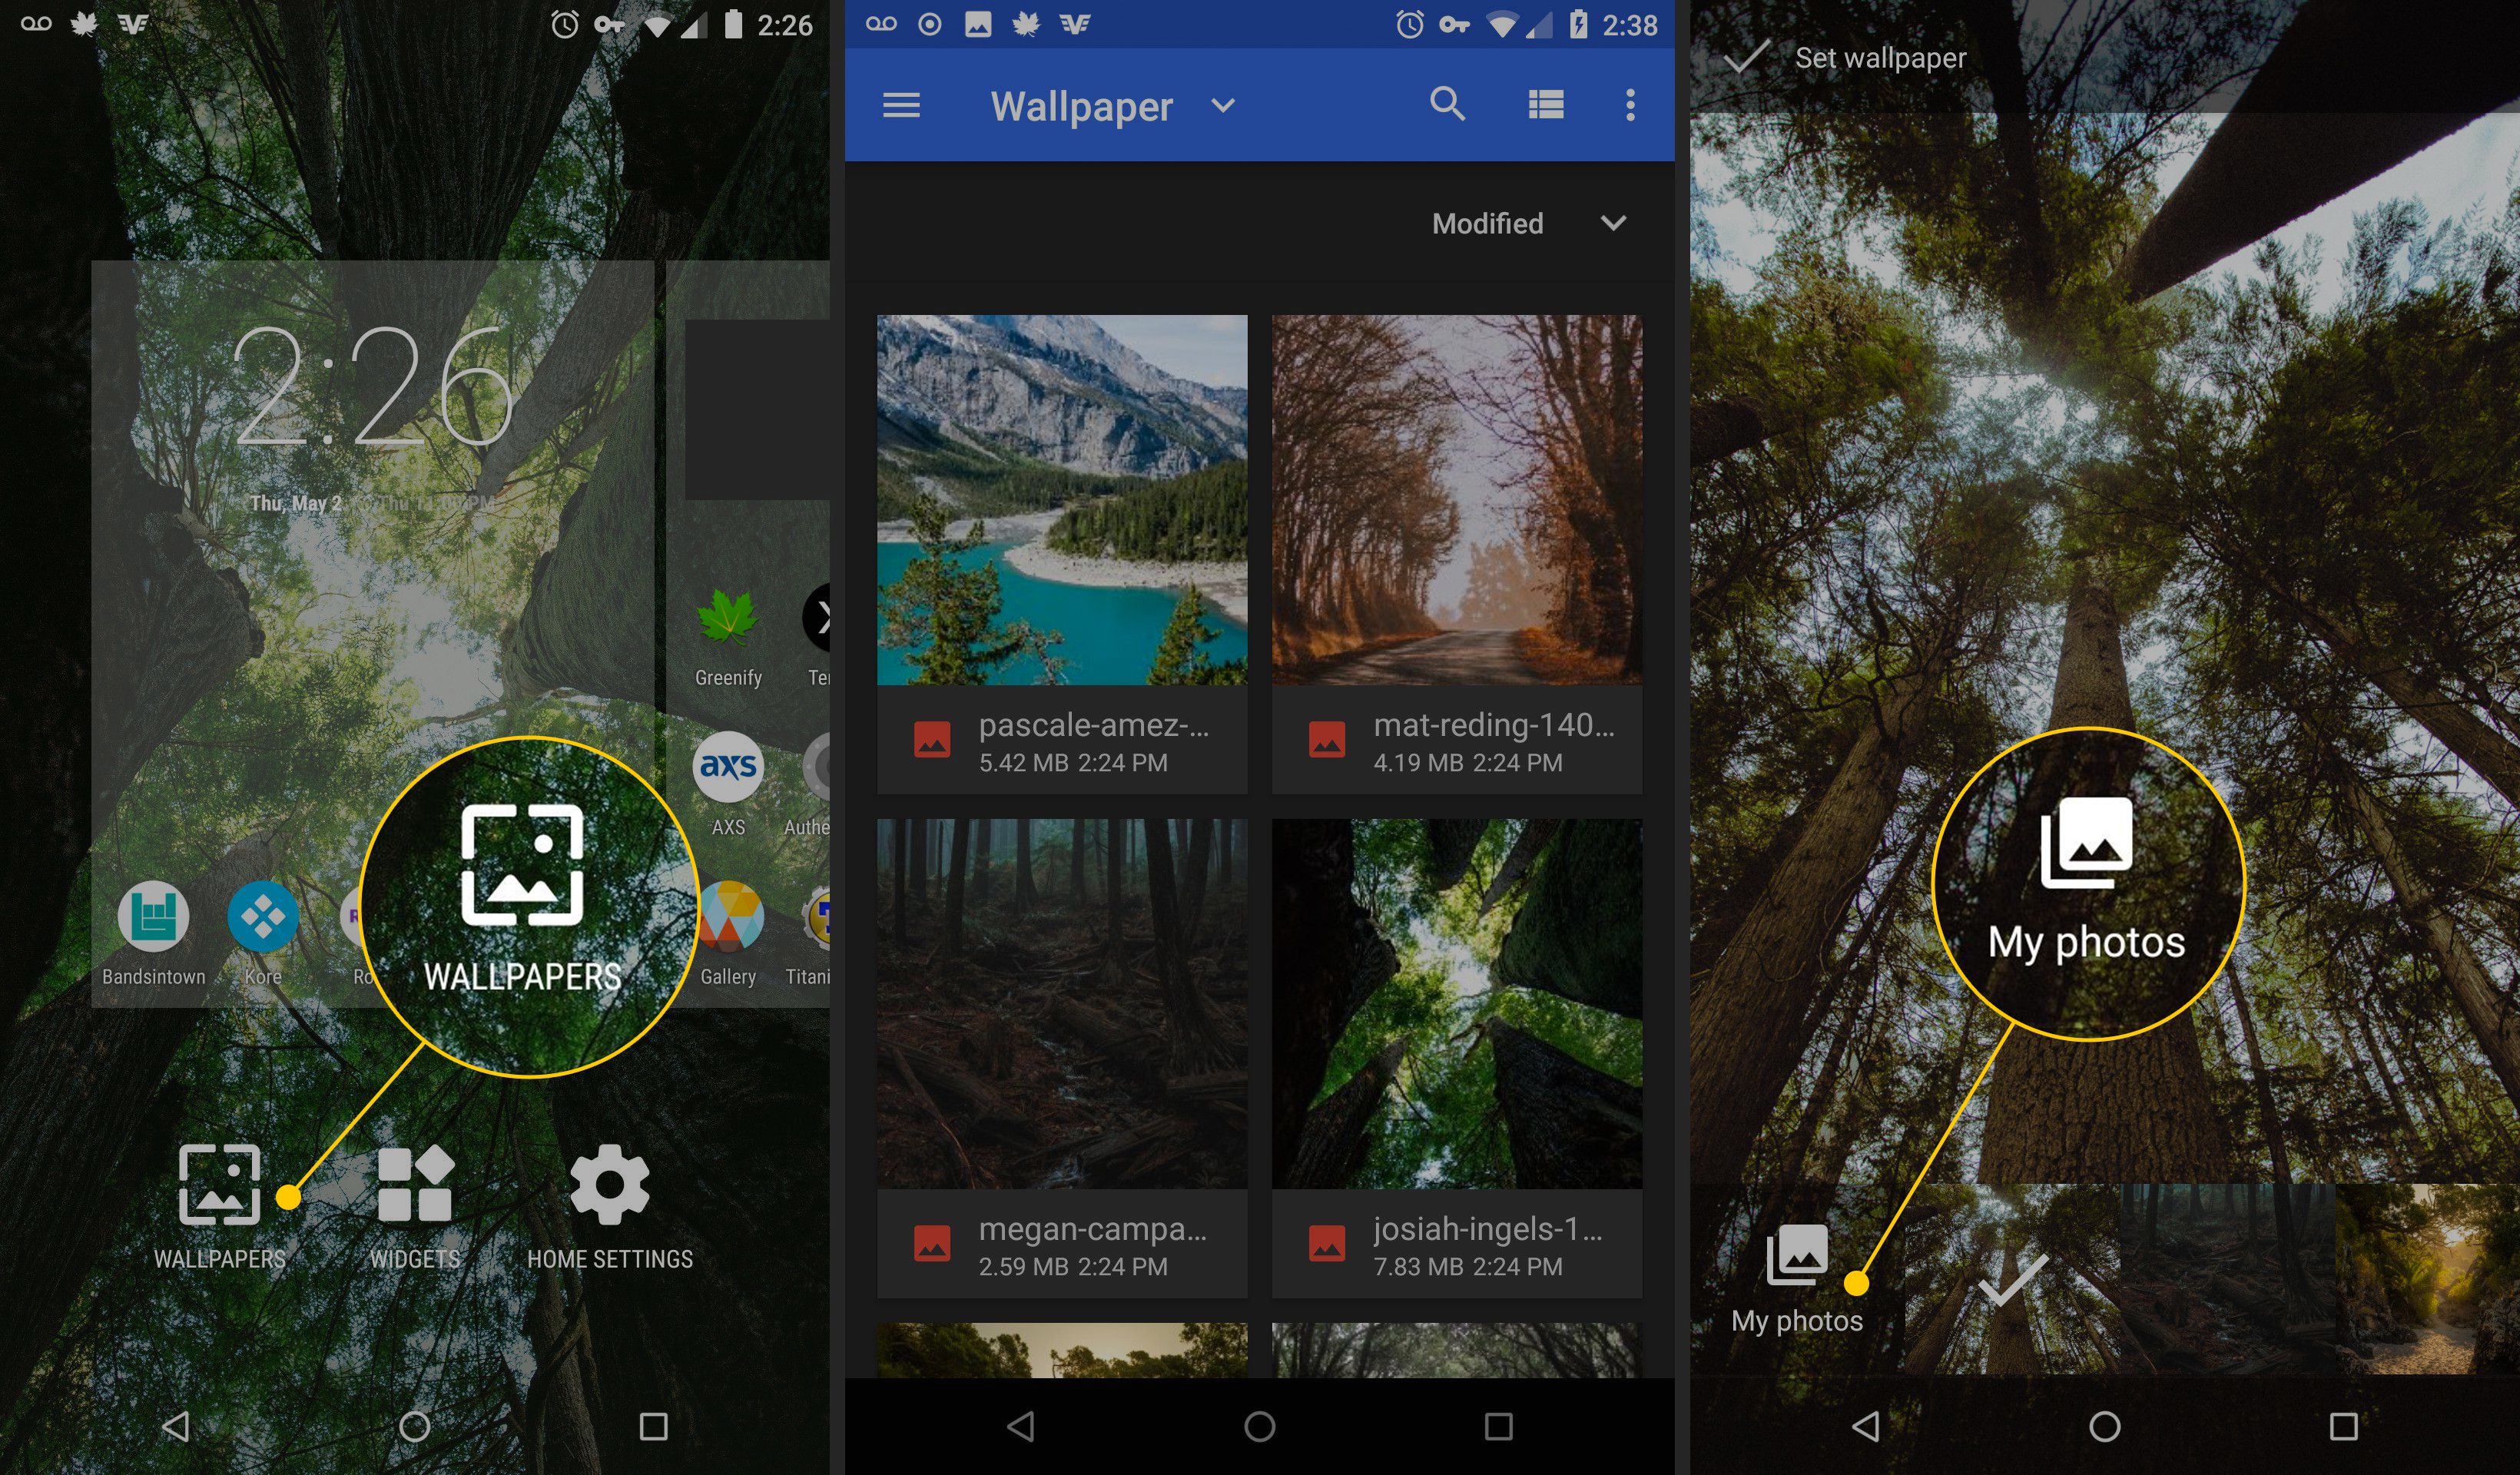 Tapeta, obrázky, tlačítko Moje fotky v Nastavení Androidu